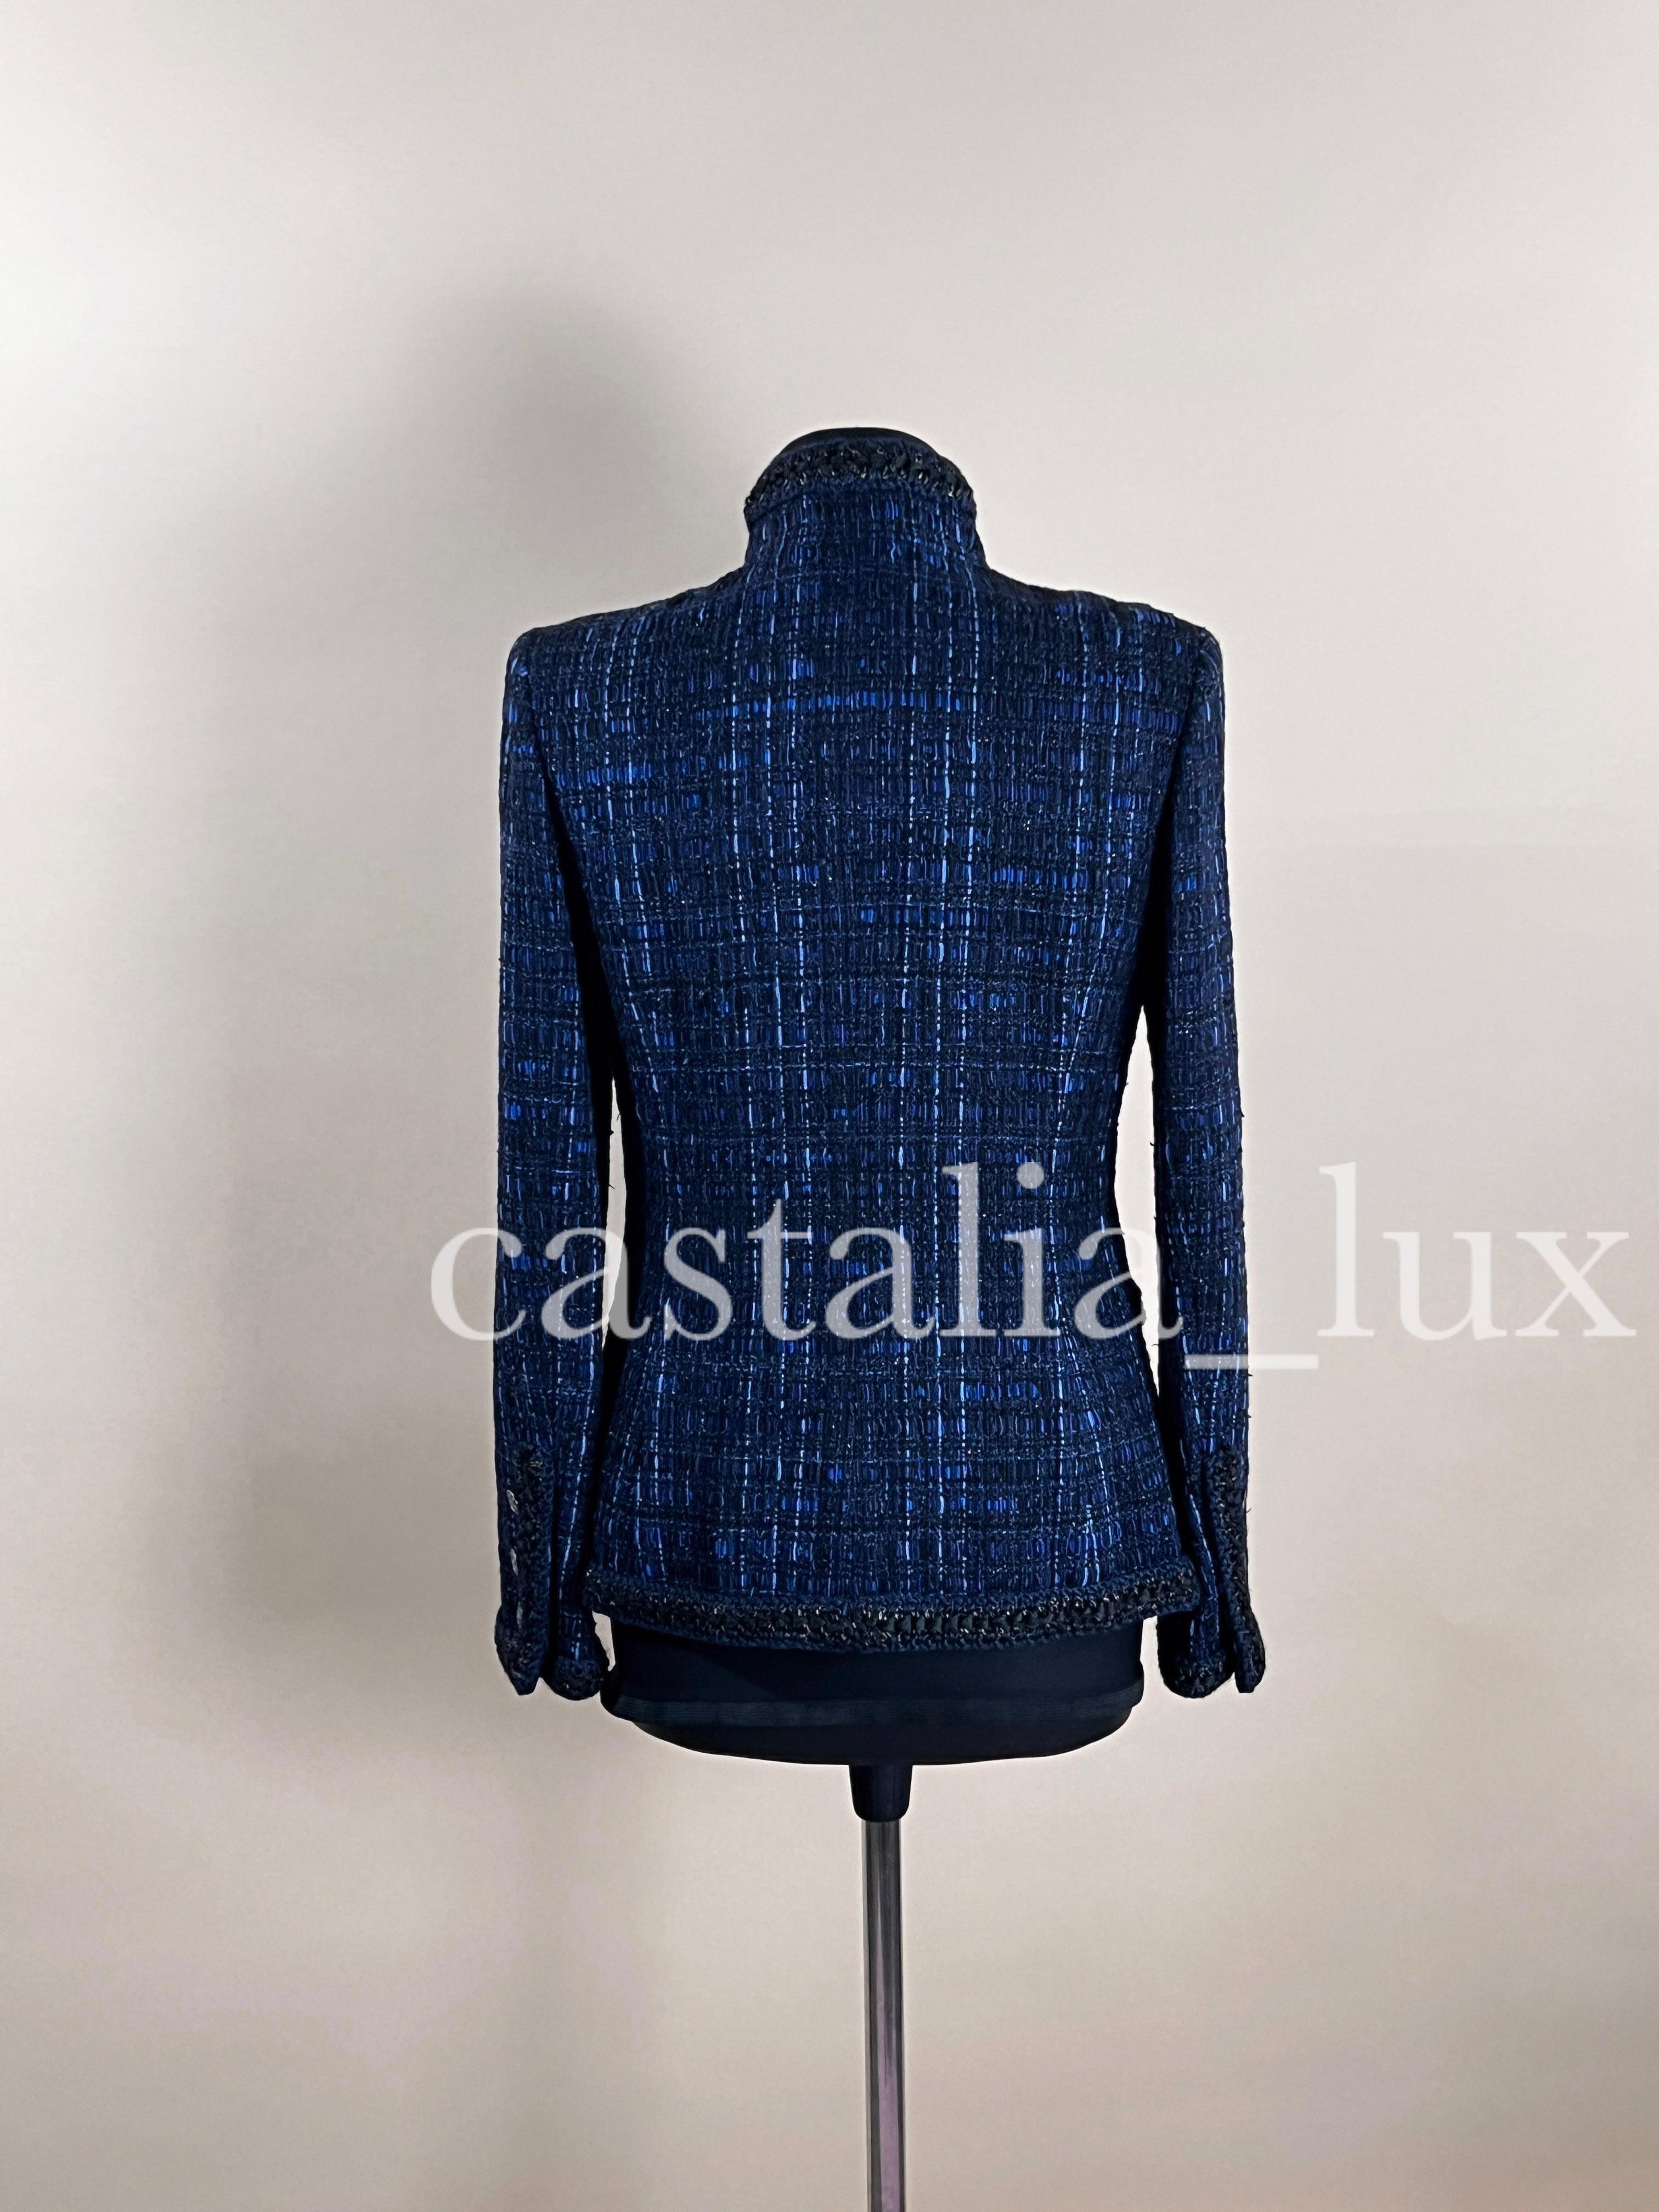 Chanel Paris / Shanghai Ribbon Tweed Jacket 11